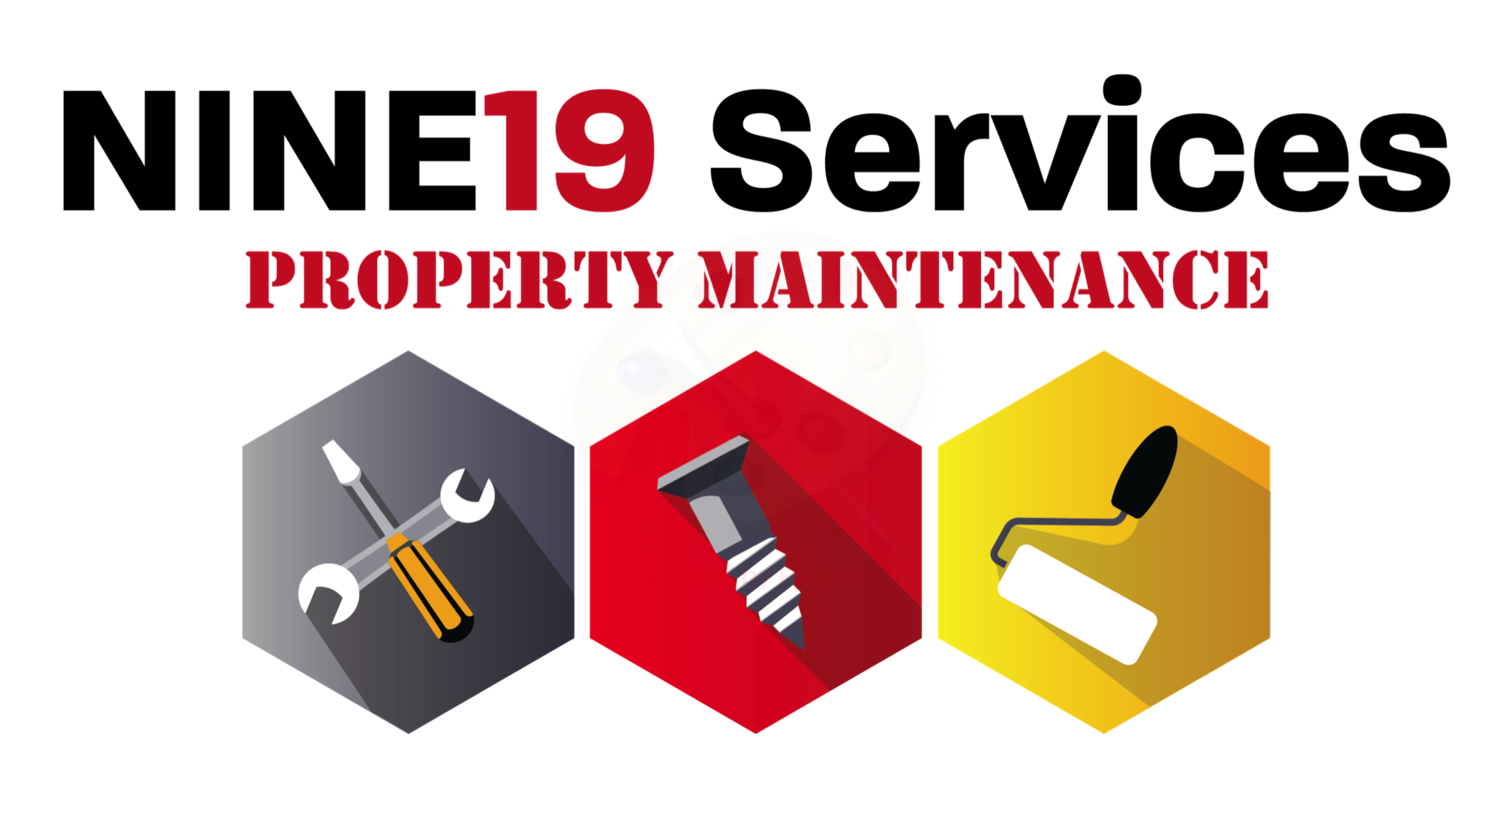 Nine19 Property Maintenance Services